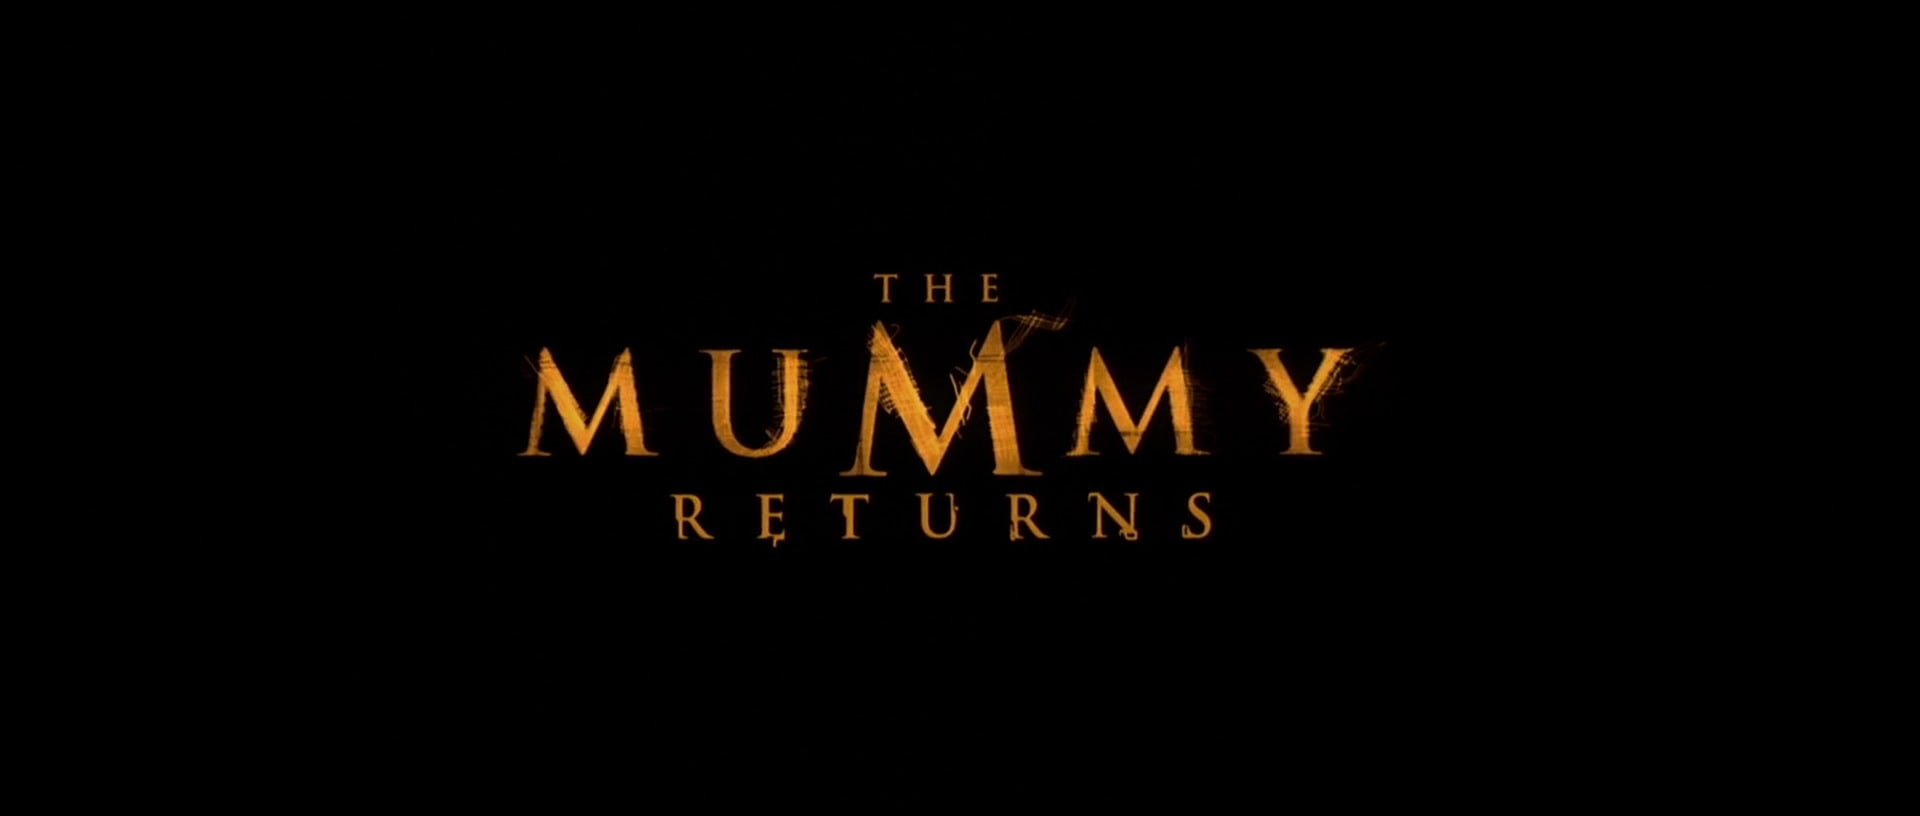 The Mummy Returns 4K 2001 big poster